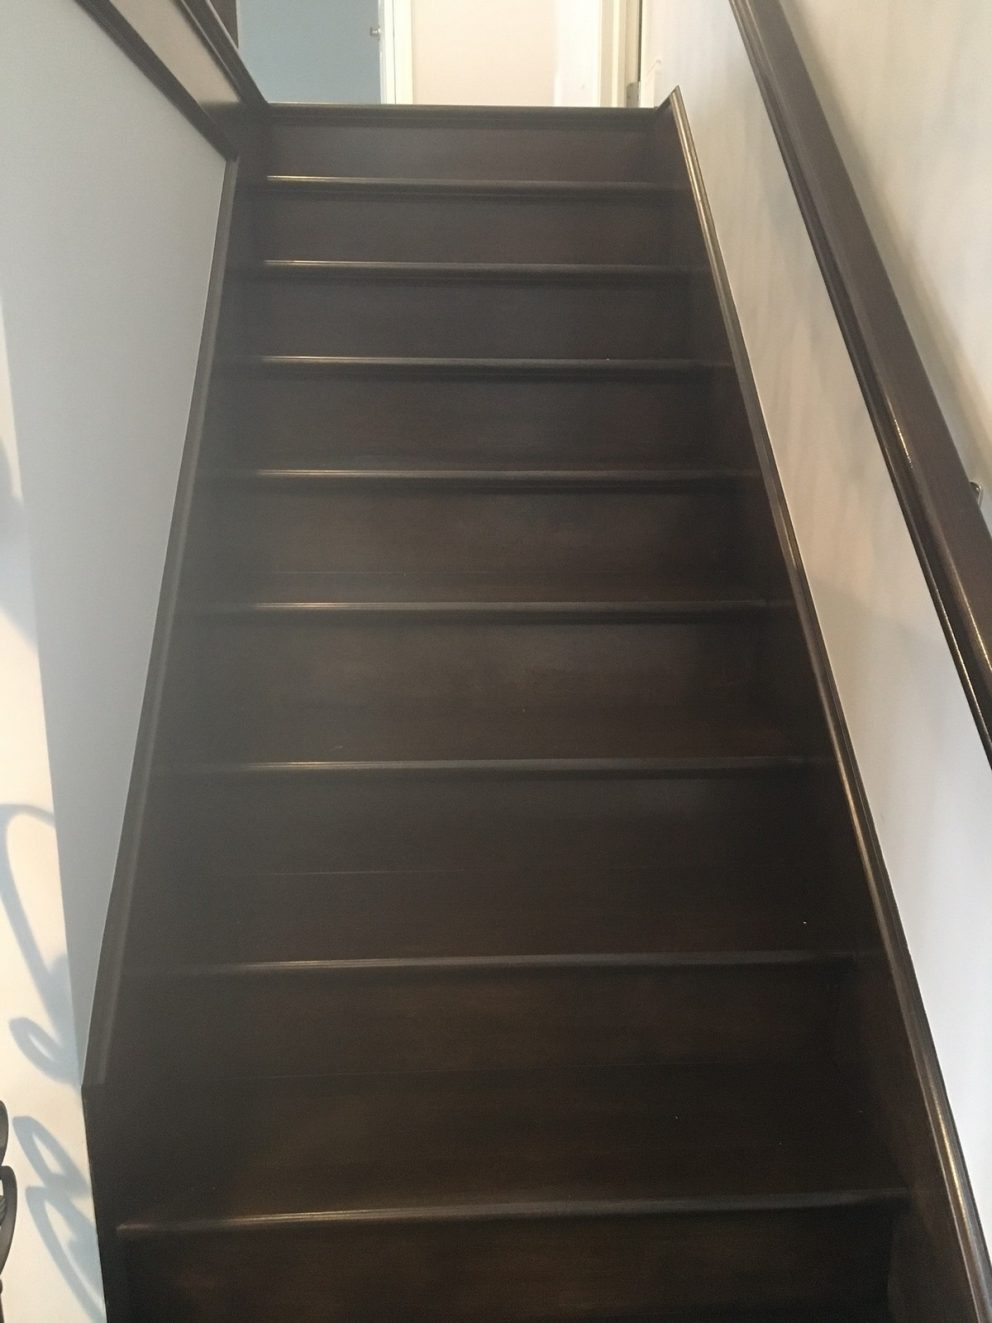 Full wood staircase with dark mocha finish